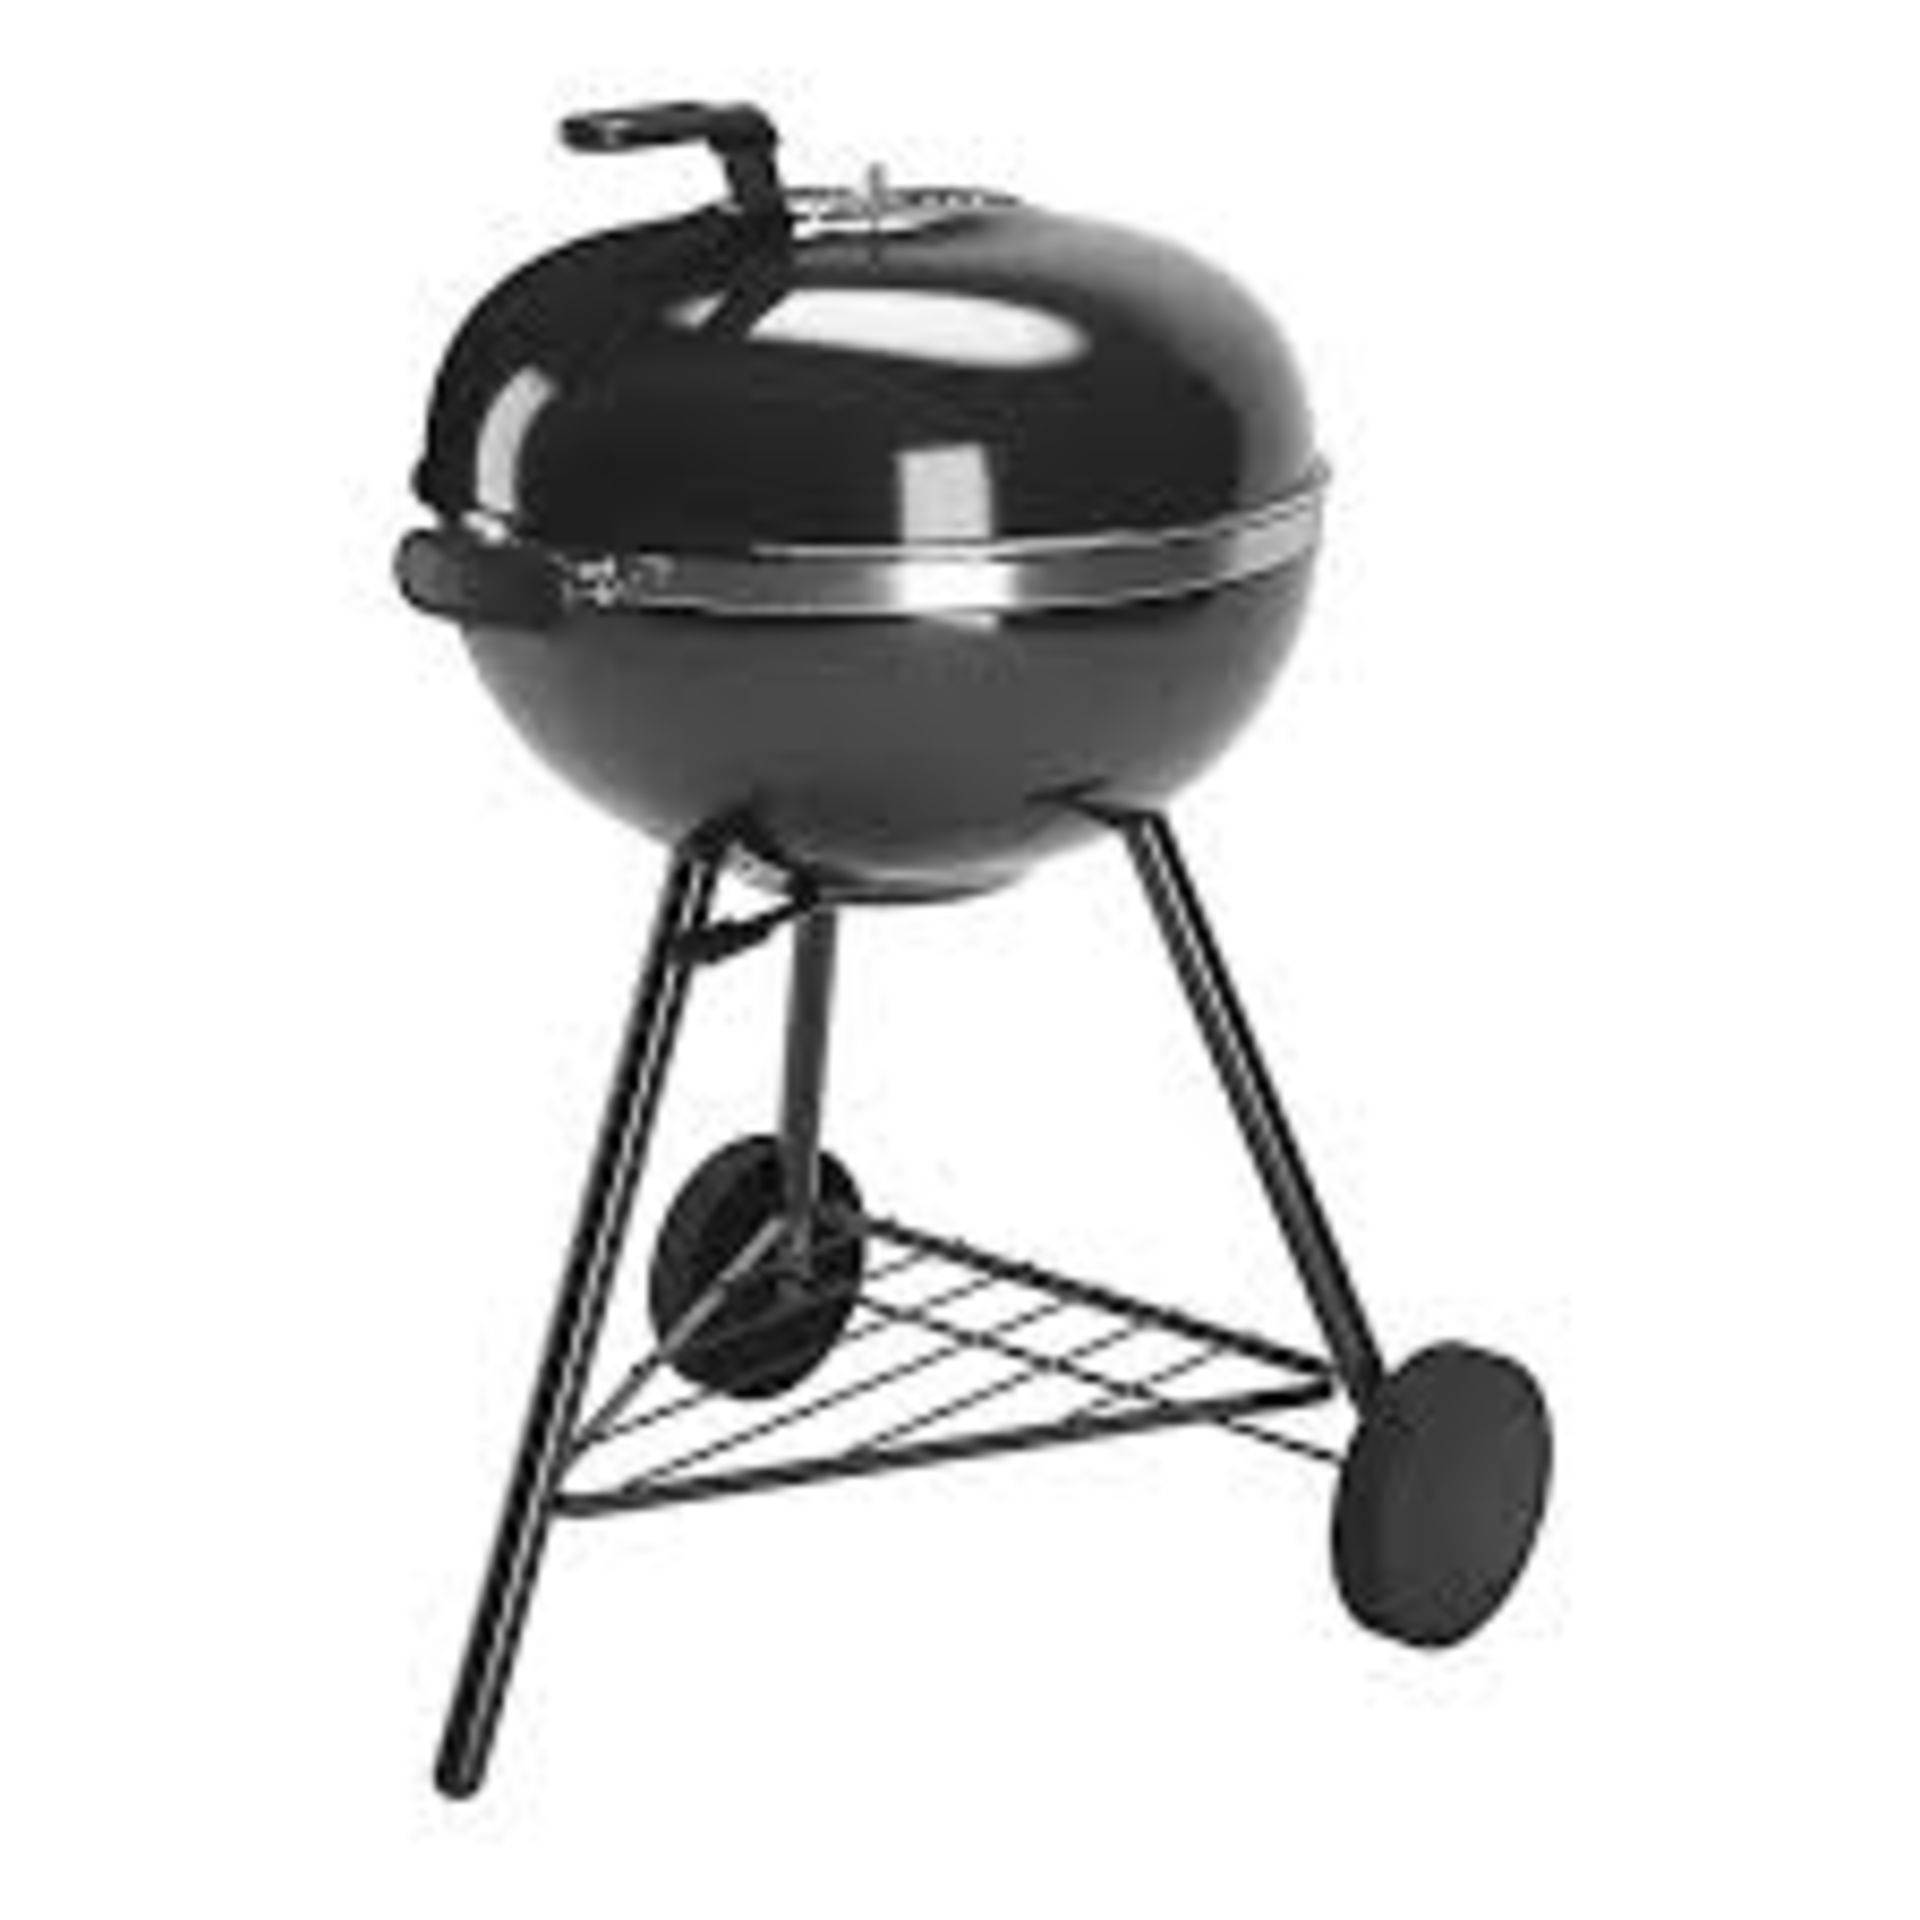 GoodHome Kiowa Black Charcoal Barbecue. - P5. The GoodHome Kiowa round charcoal barbecue offers